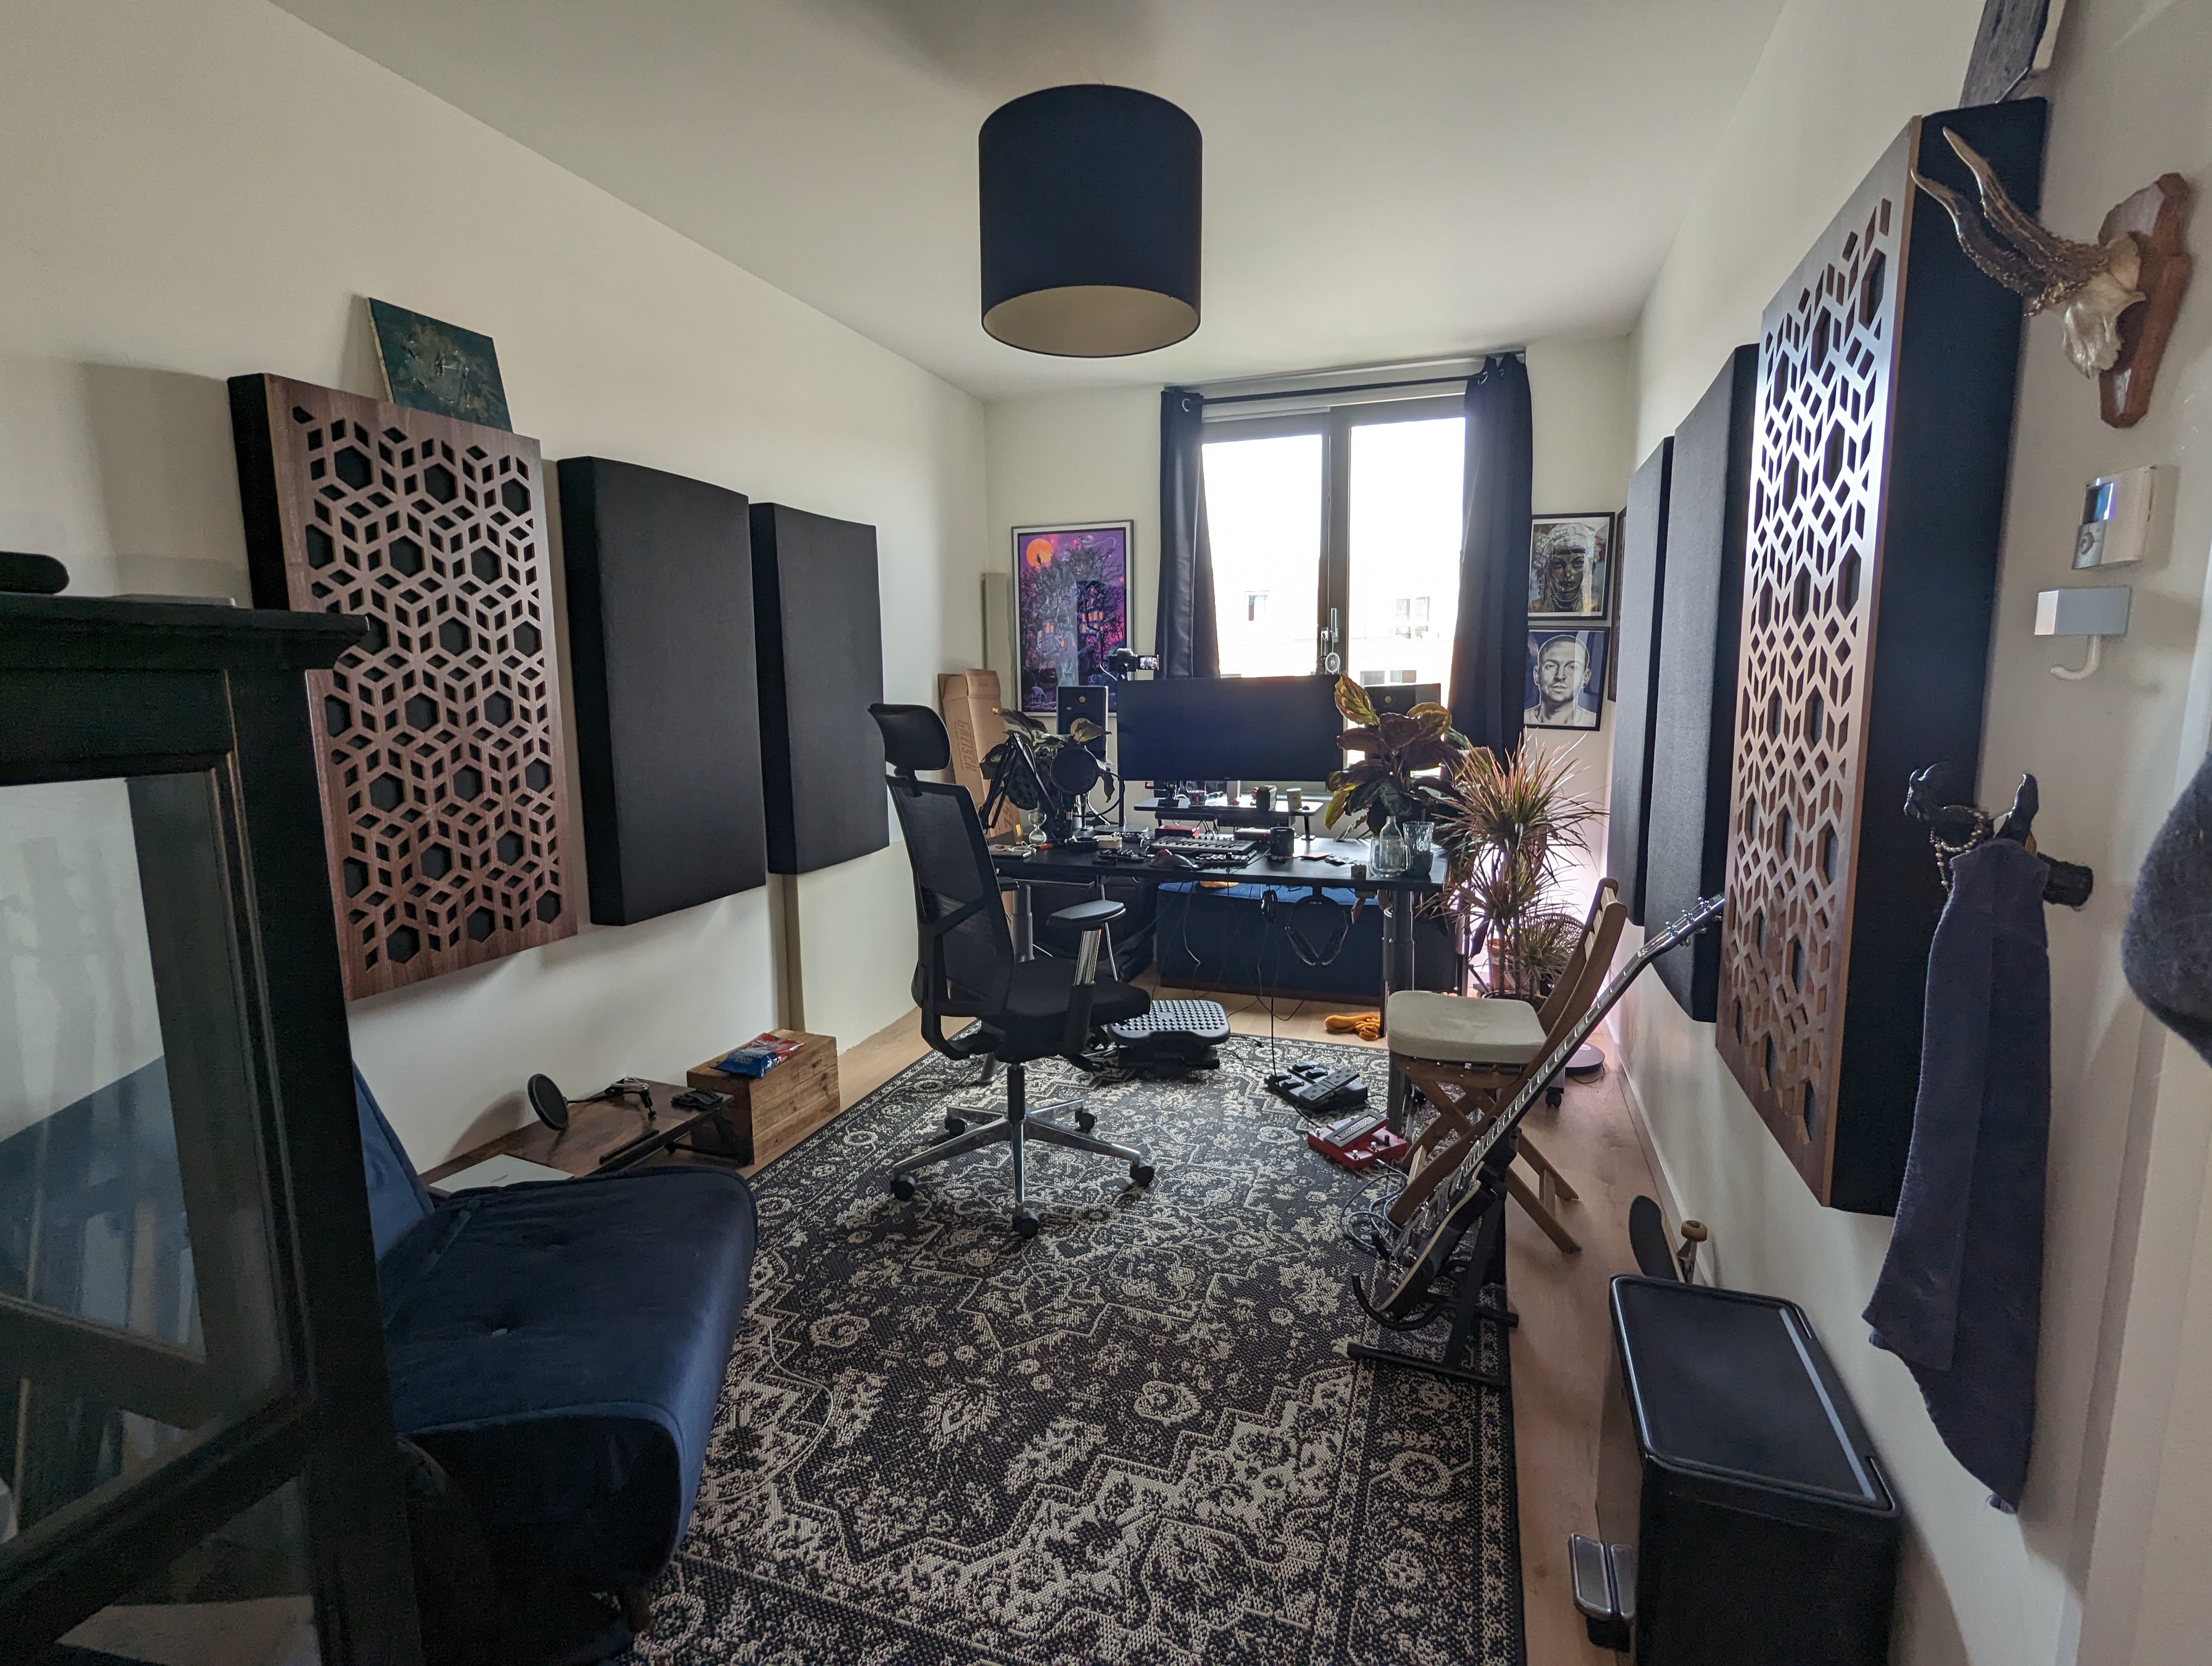 My home studio